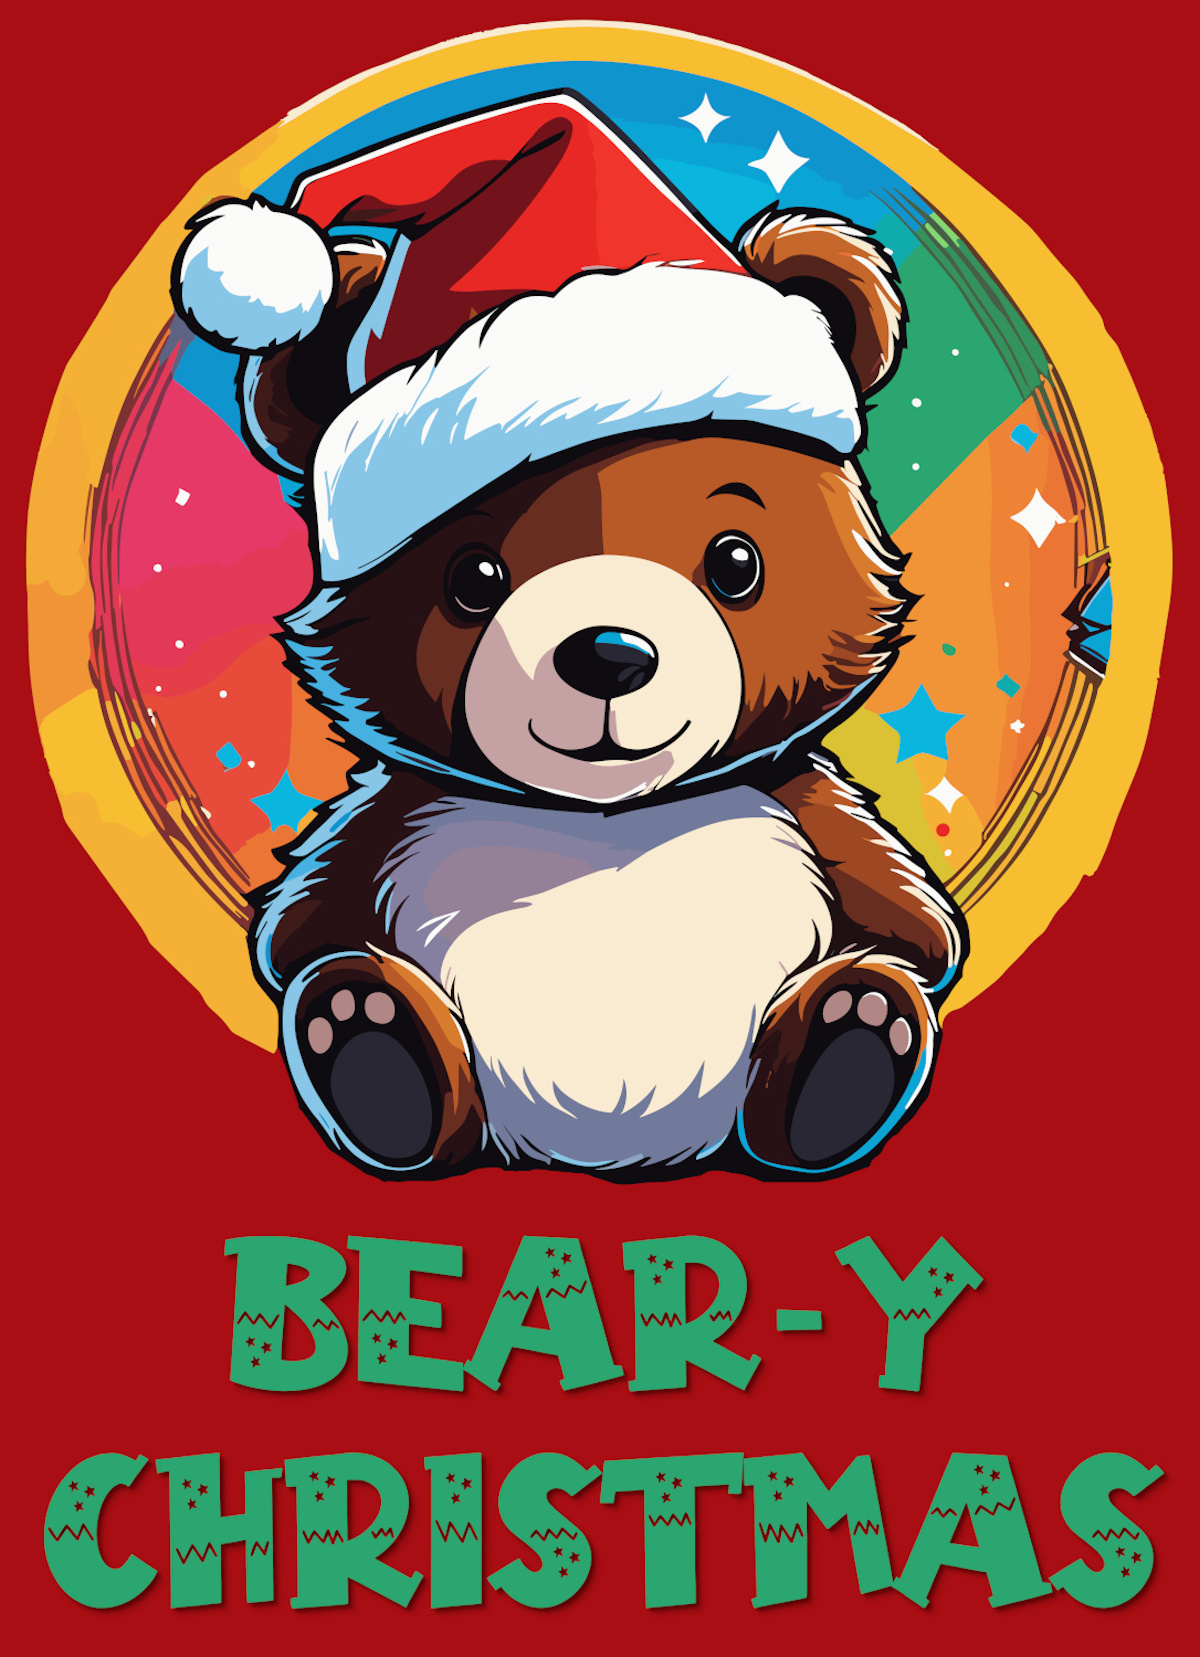 Cute Adorable Kawaii Chibi Beary Christmas Bear Beary merry Christmas from my adorable kawaii chibi bear! 🐻🎄🎁